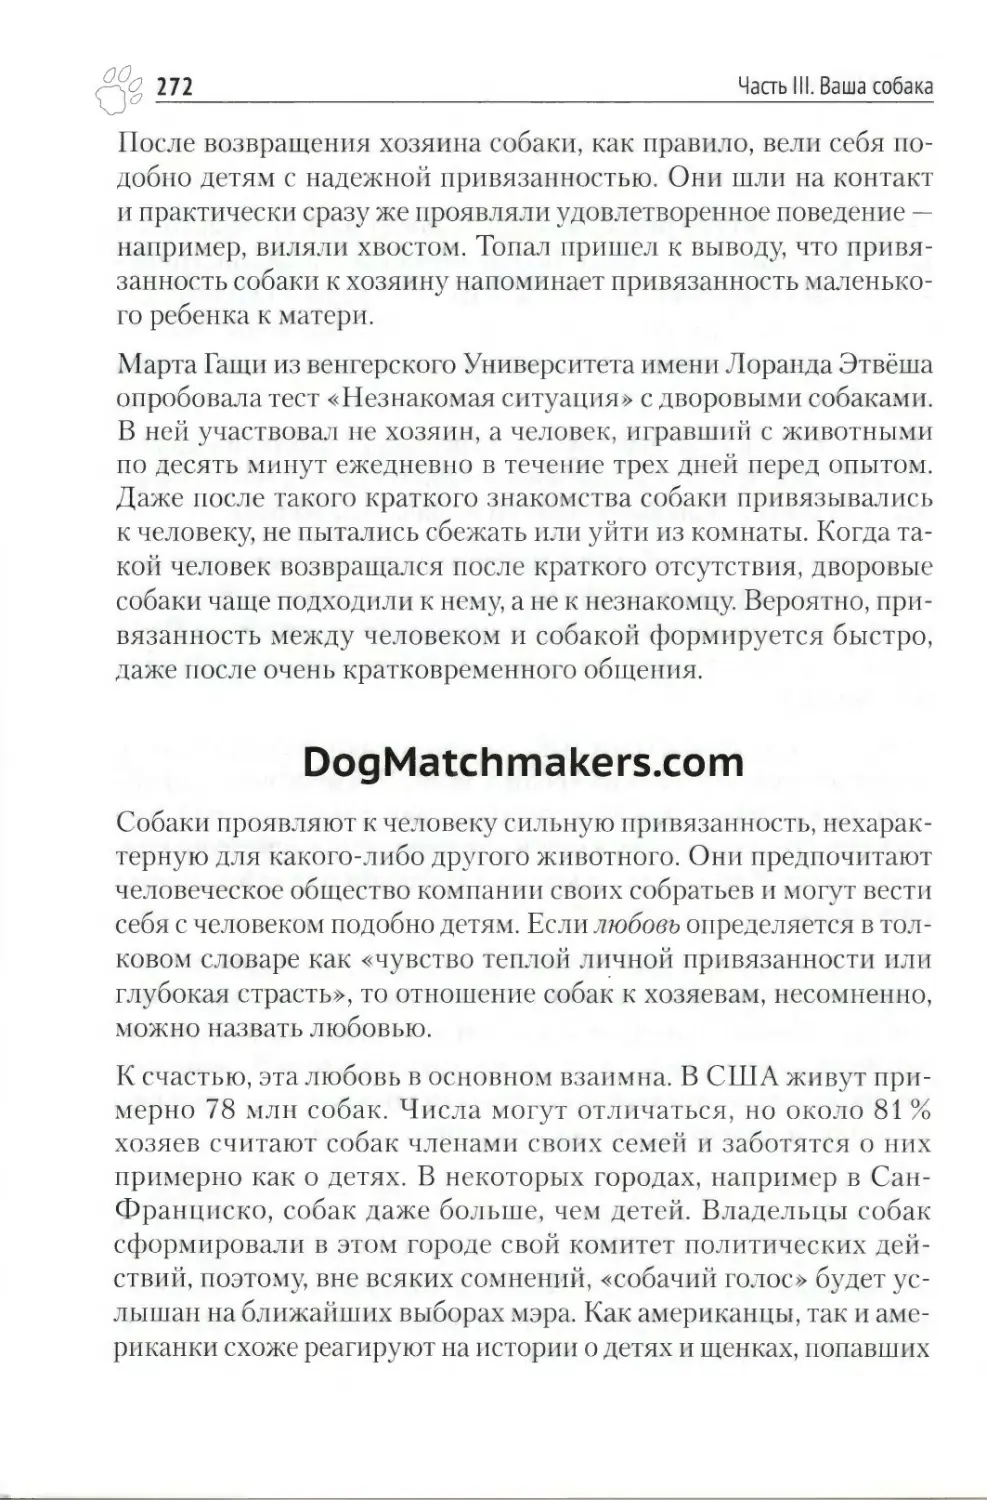 DogMatchmakers.com